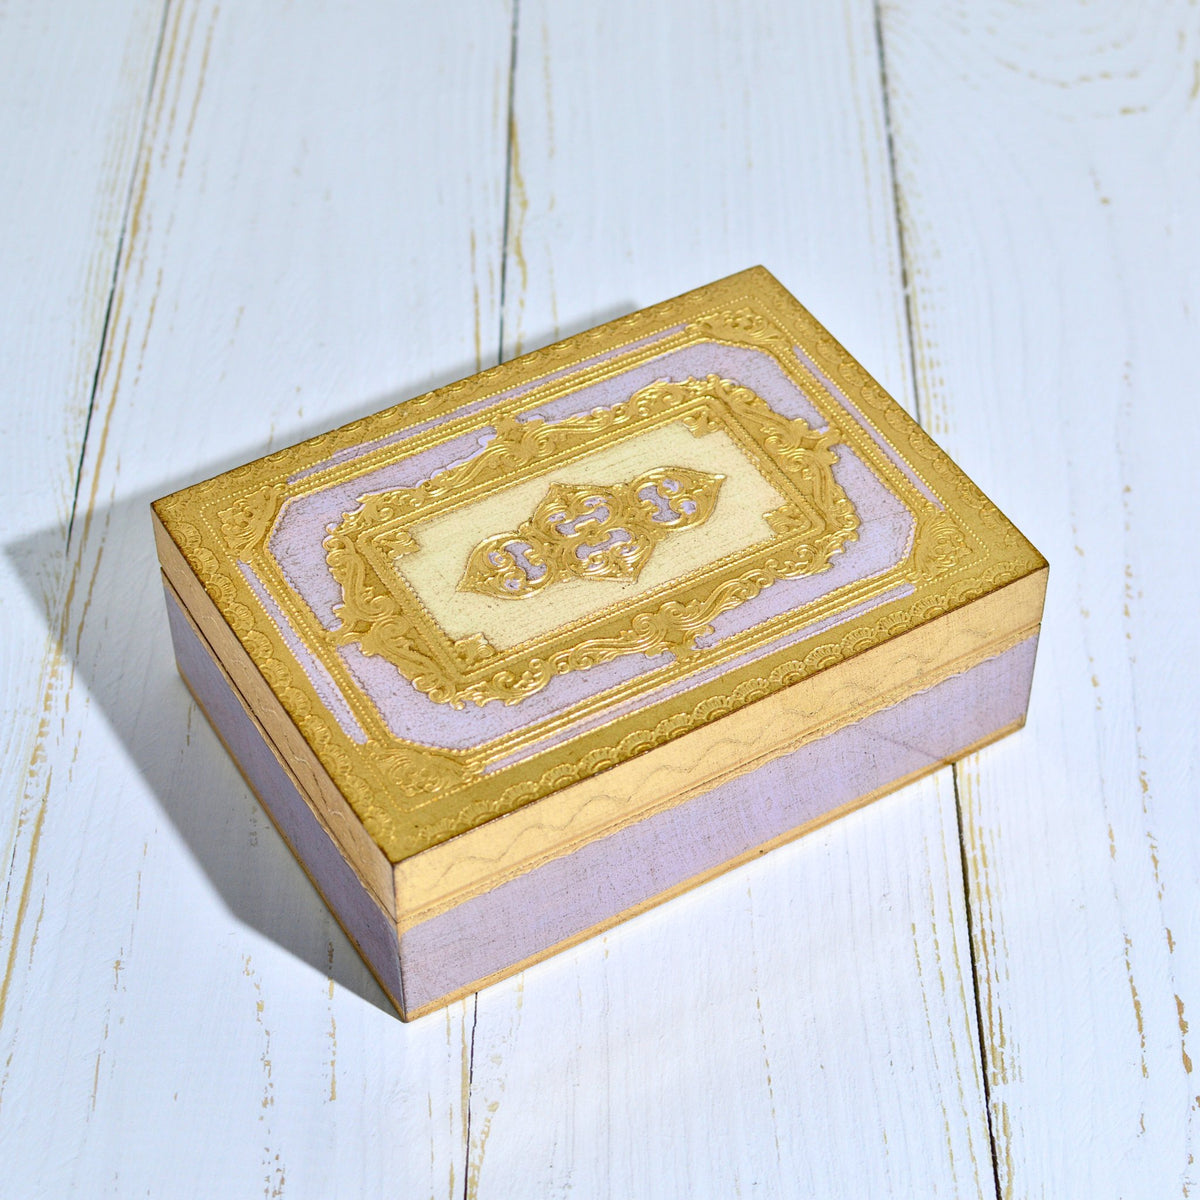 Florentine Carved Wood Box with Lid, Jewelry, Keepsake Box - My Italian Decor